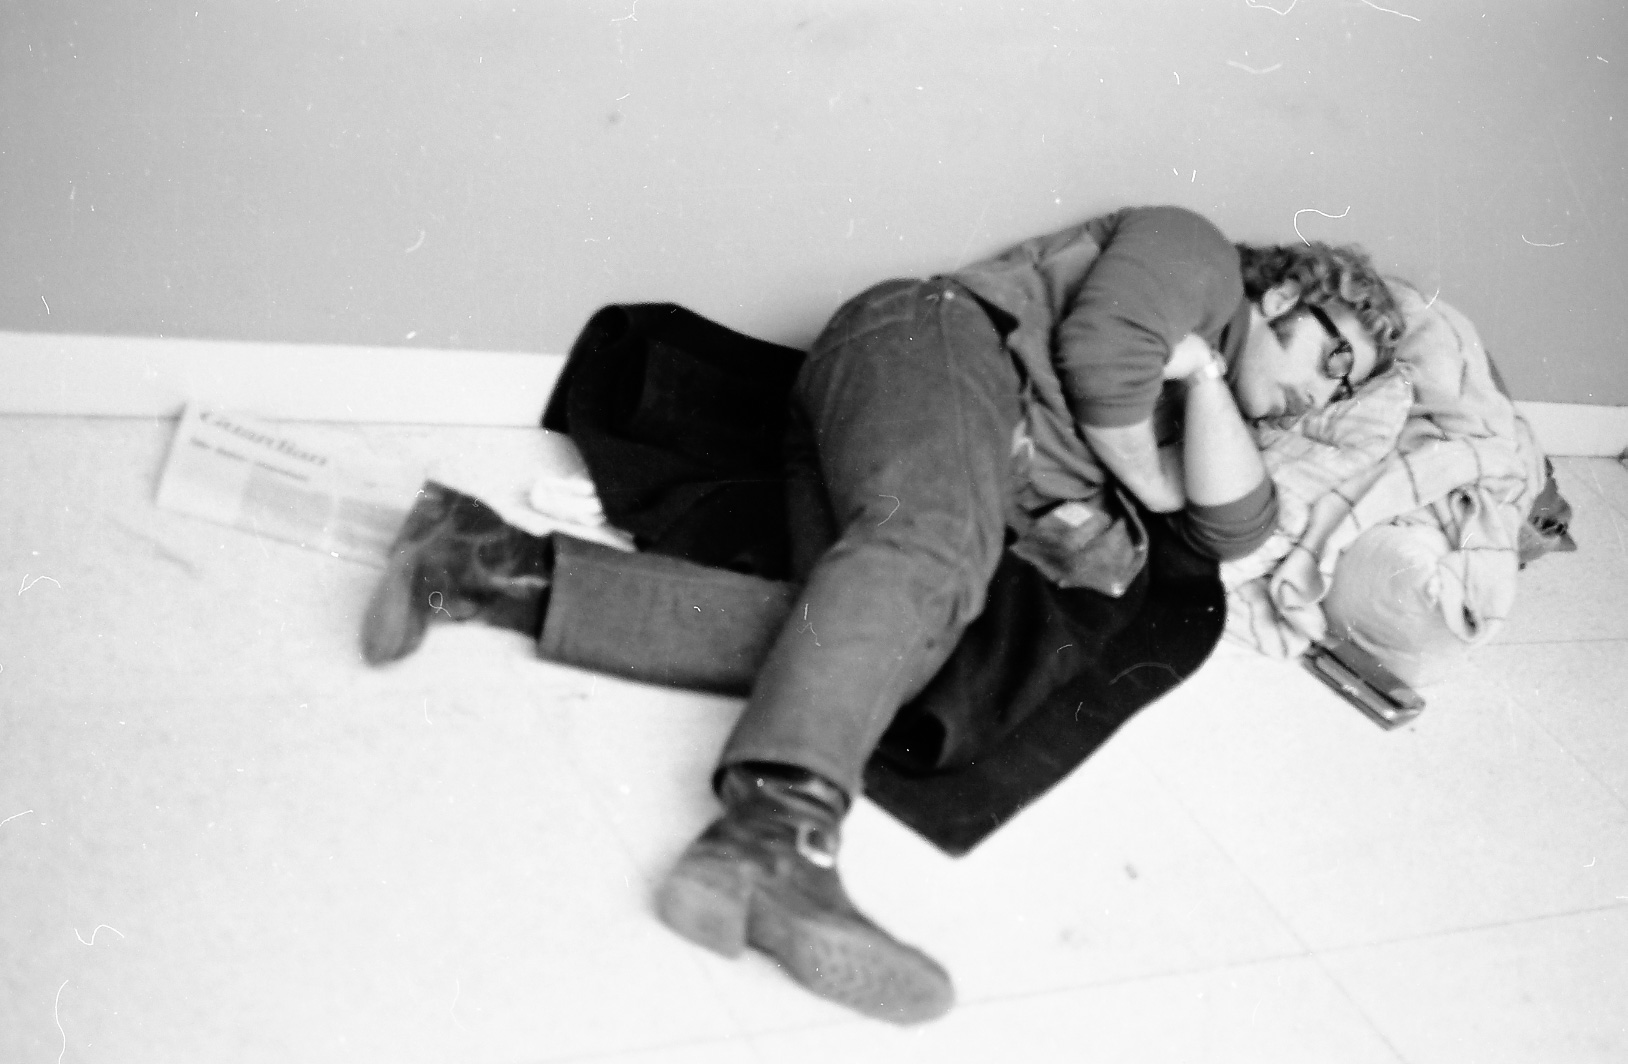 student occupier sleeping on the floor of Bernstein-Marcus Administration Center